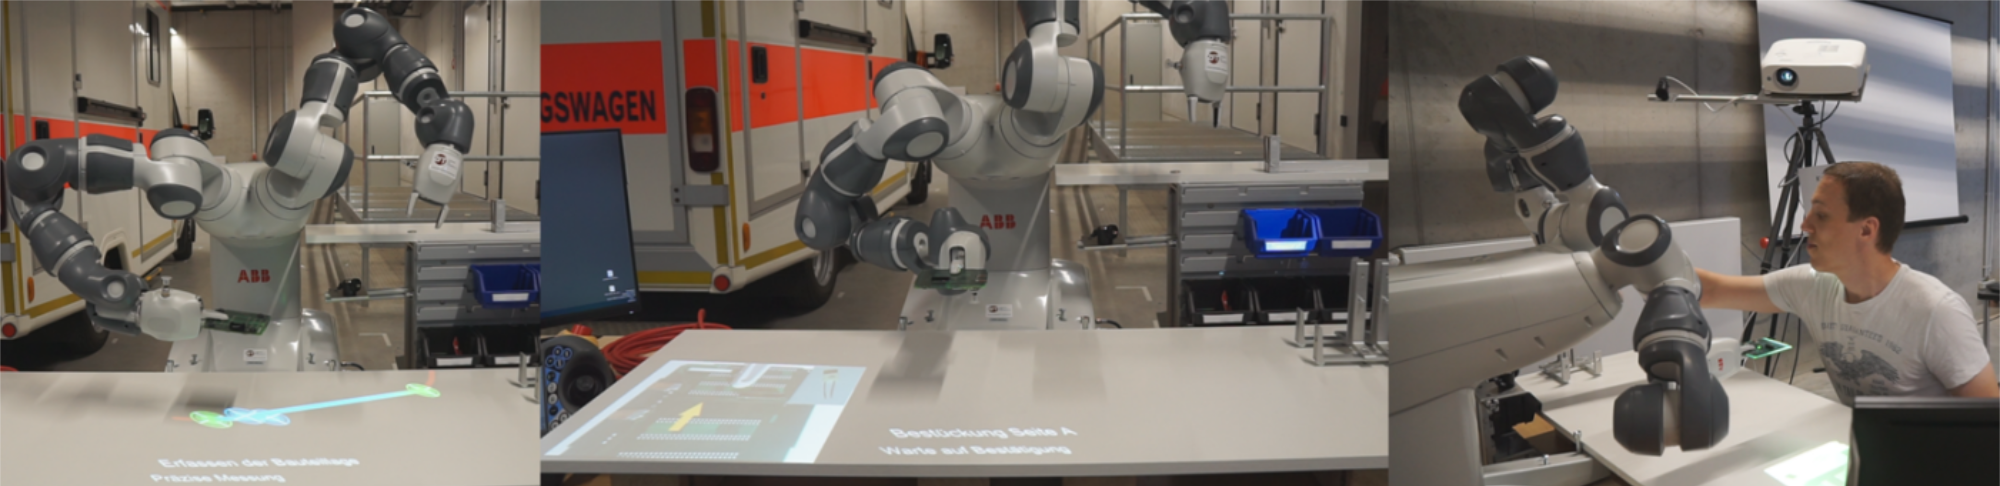 Spatial Augmented Reality und kollaborative Robotik